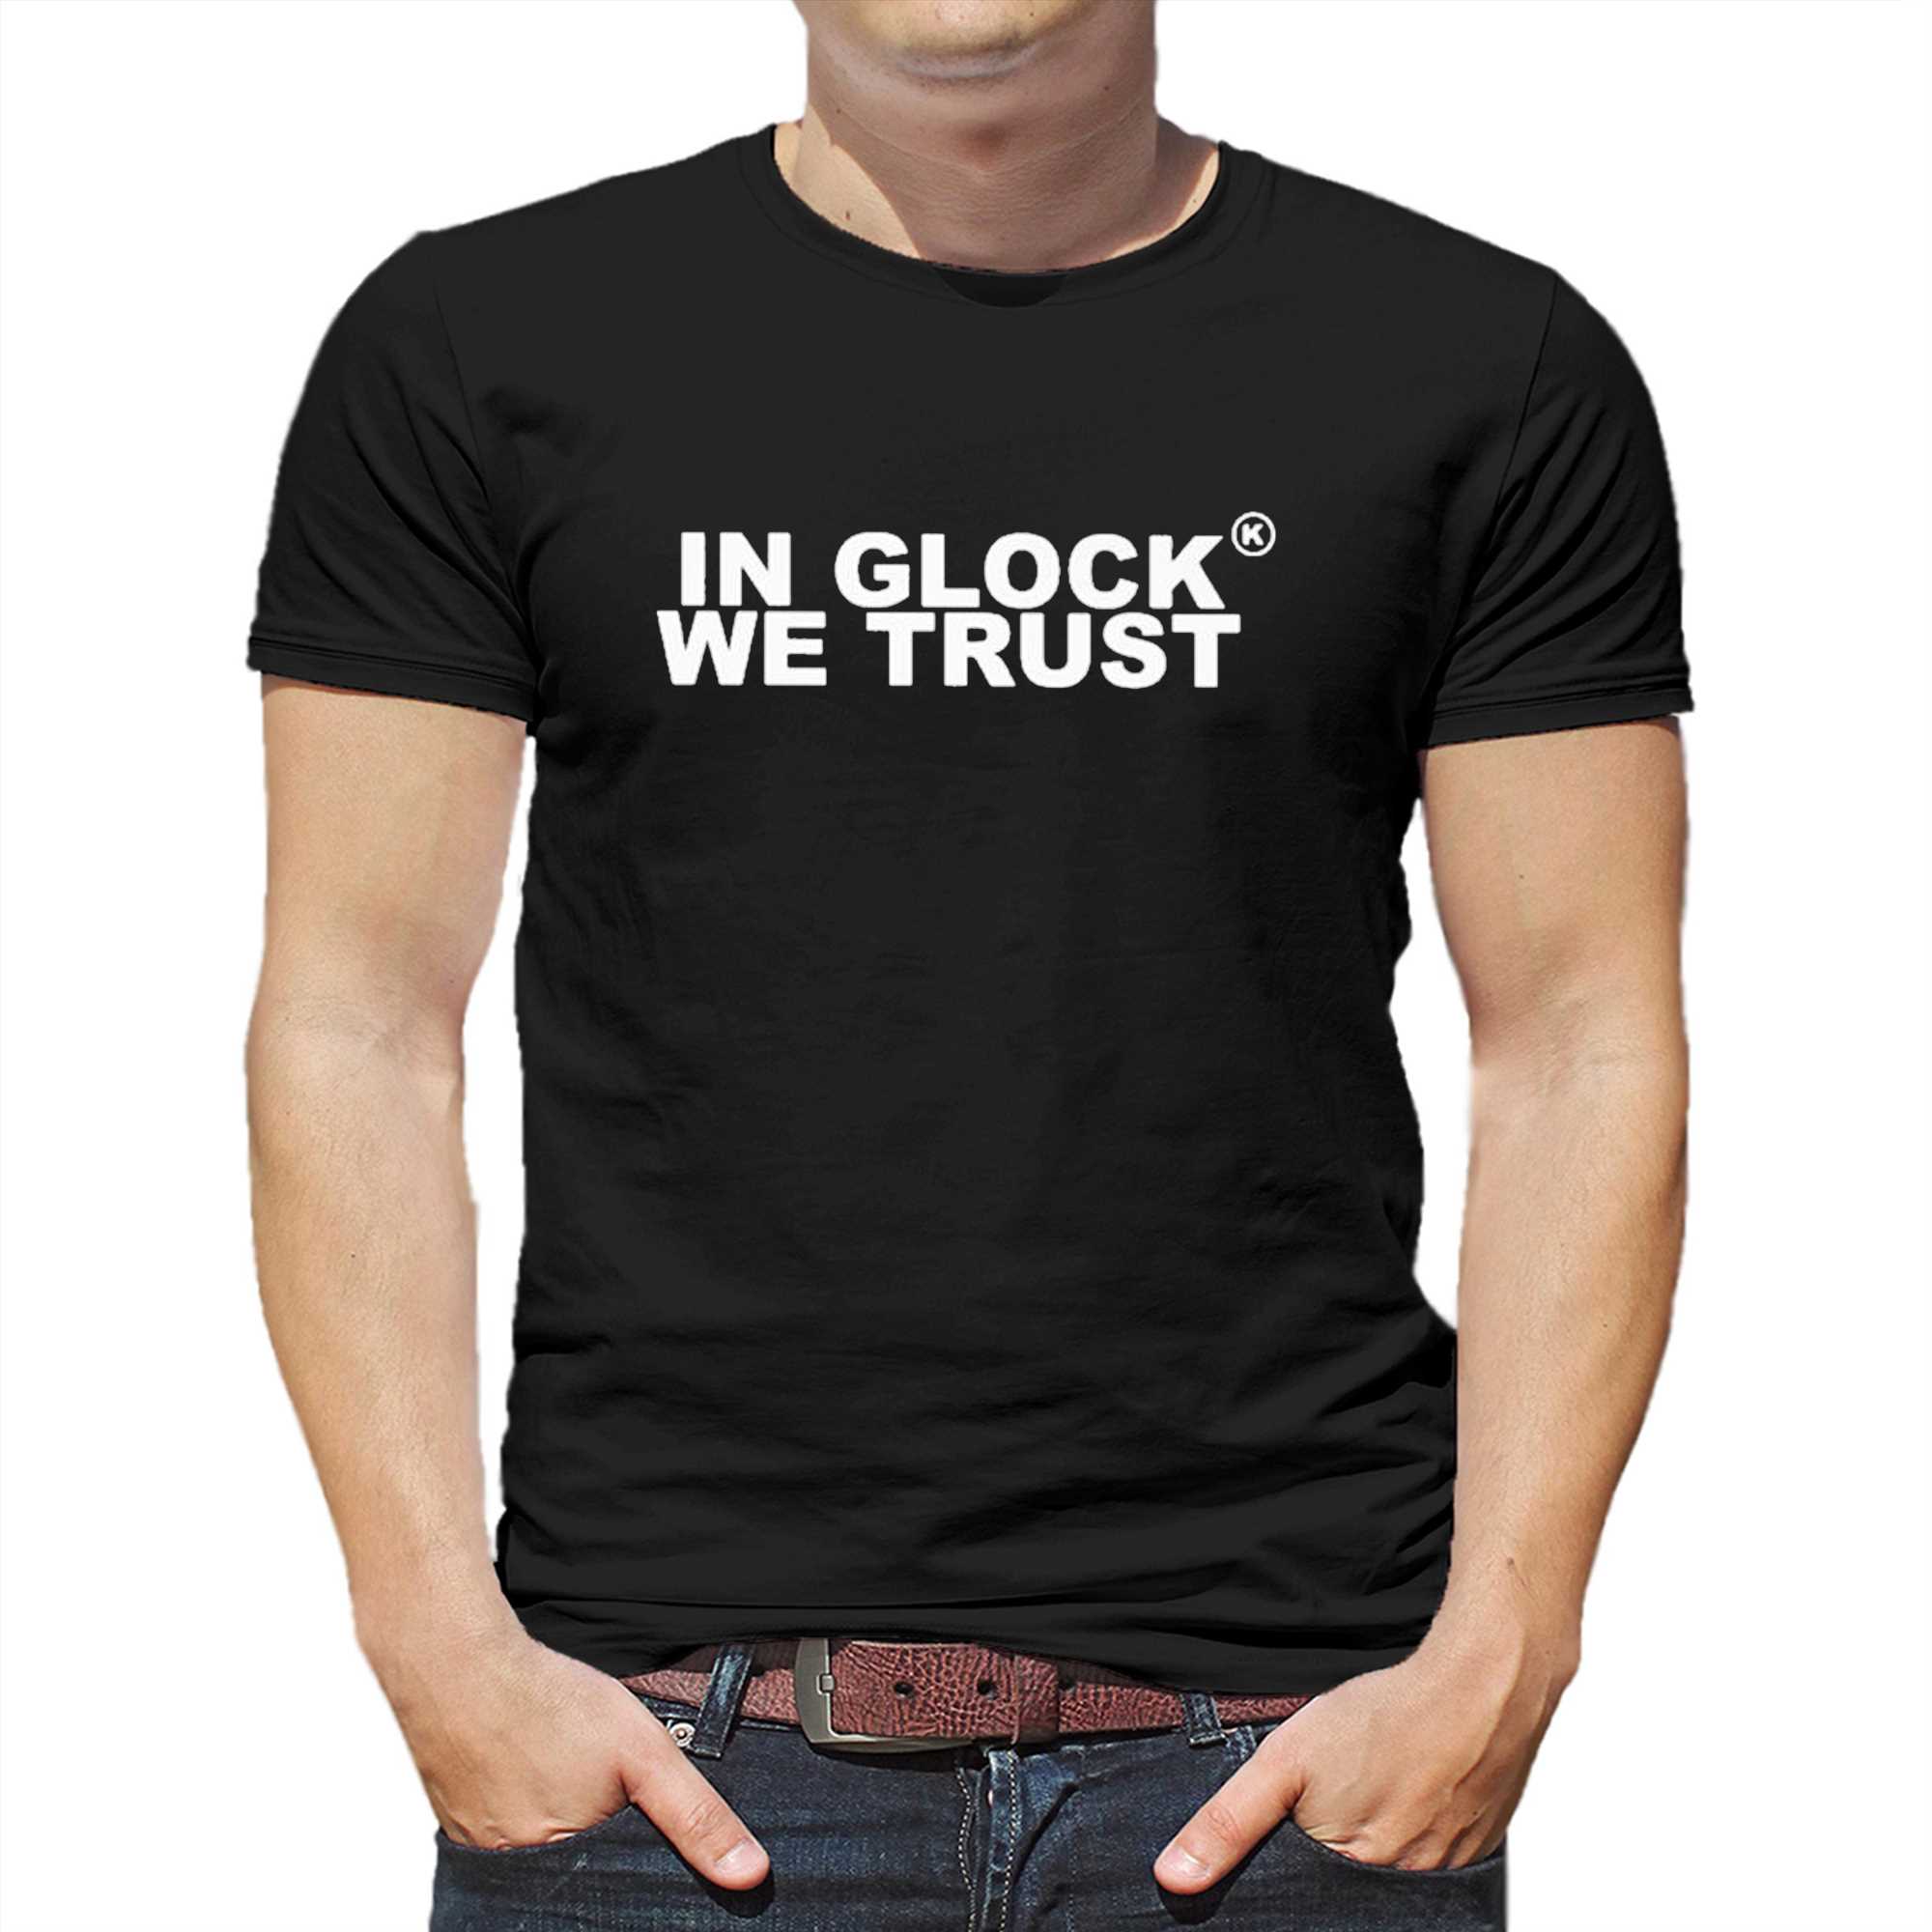 In Glock We Trust Shirt - Shibtee Clothing